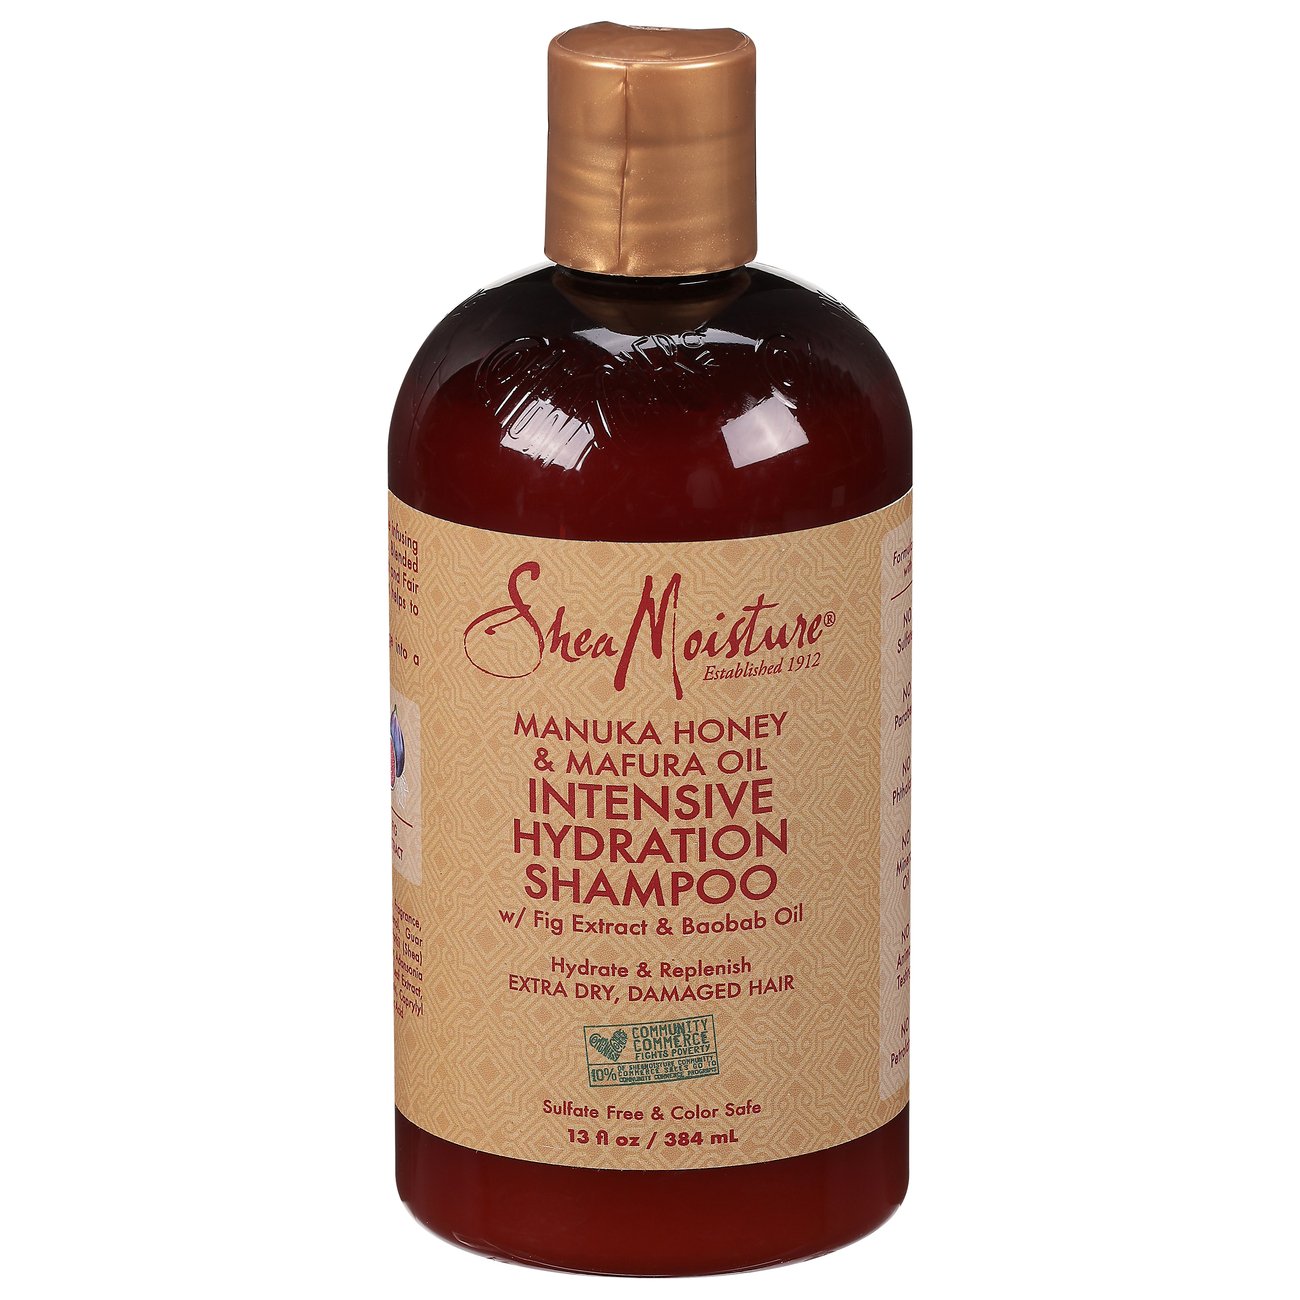 Shea Moisture Manuka Honey Intensive Hydration Shampoo 13 oz